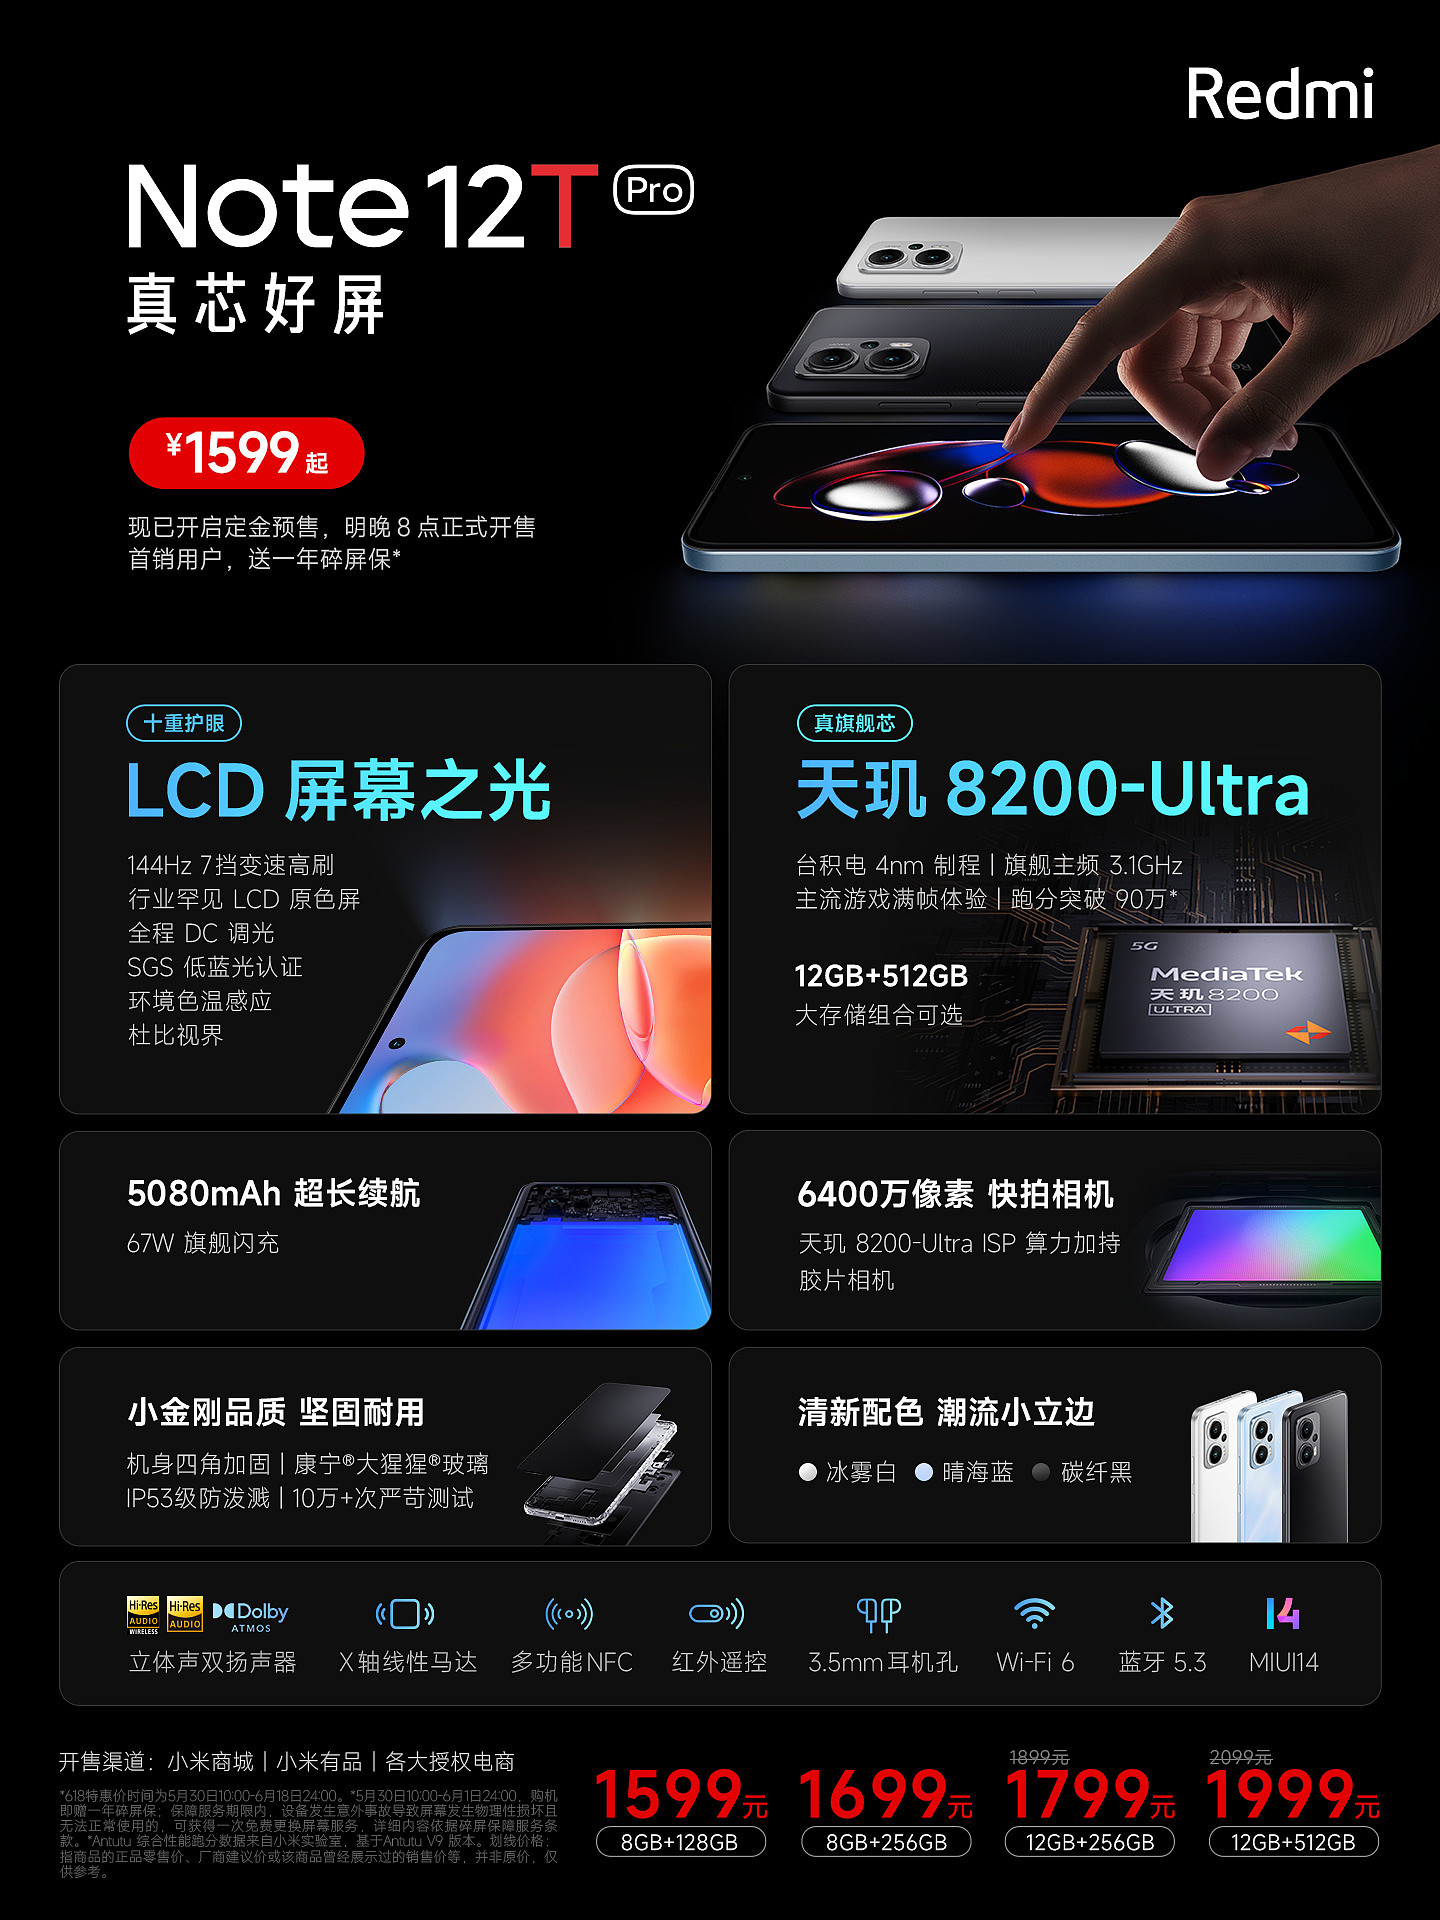 12G 版 1199 元新低：Redmi Note 12T Pro 手机京东百亿补贴（减 700 元） - 1